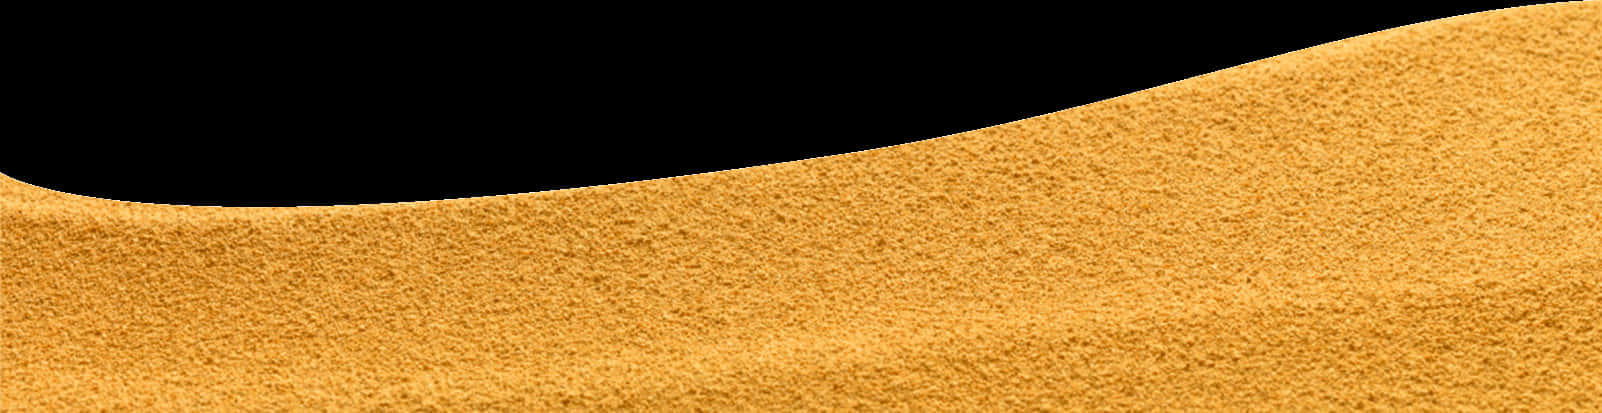 Golden Sand Wave Texture